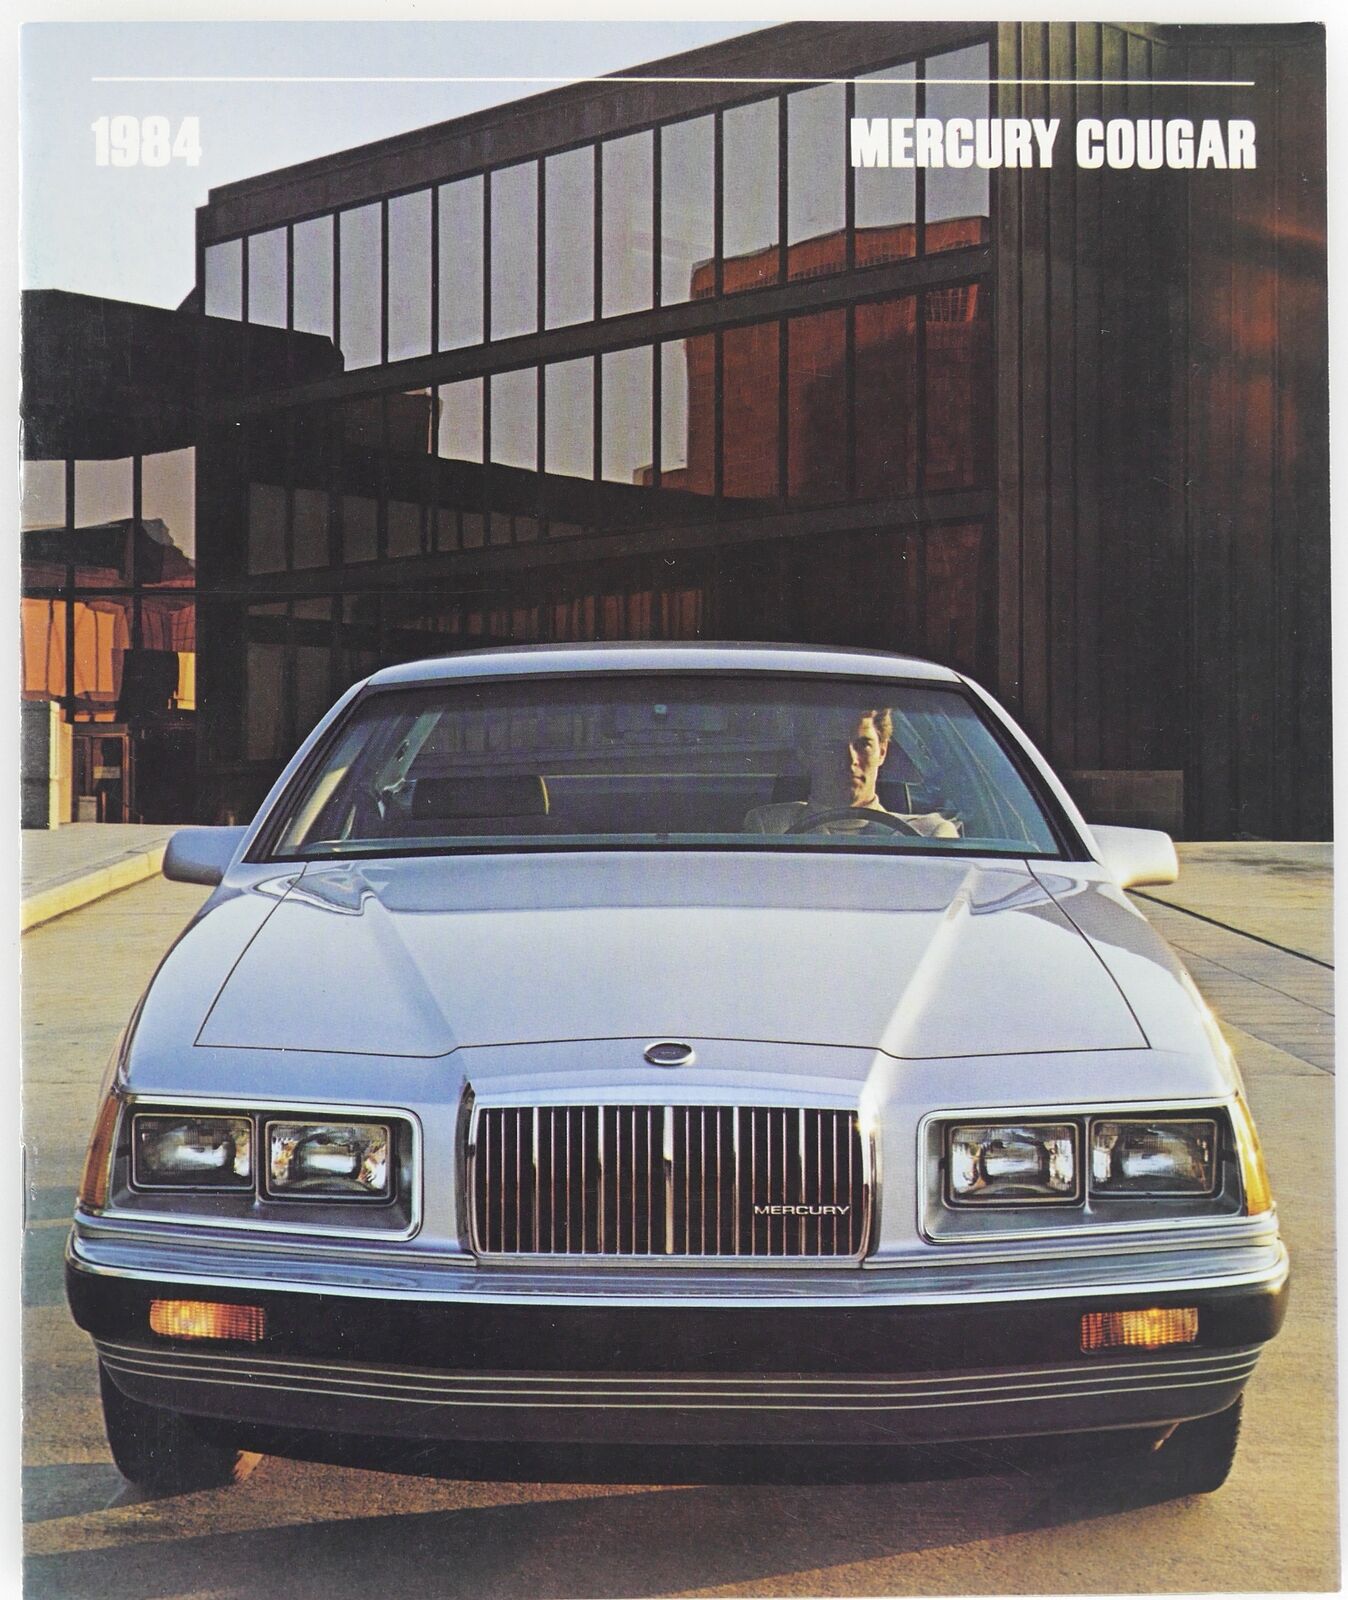 1984 Lincoln Mercury Cougar NOS Dealer Sales Brochure Print Ad Catalog